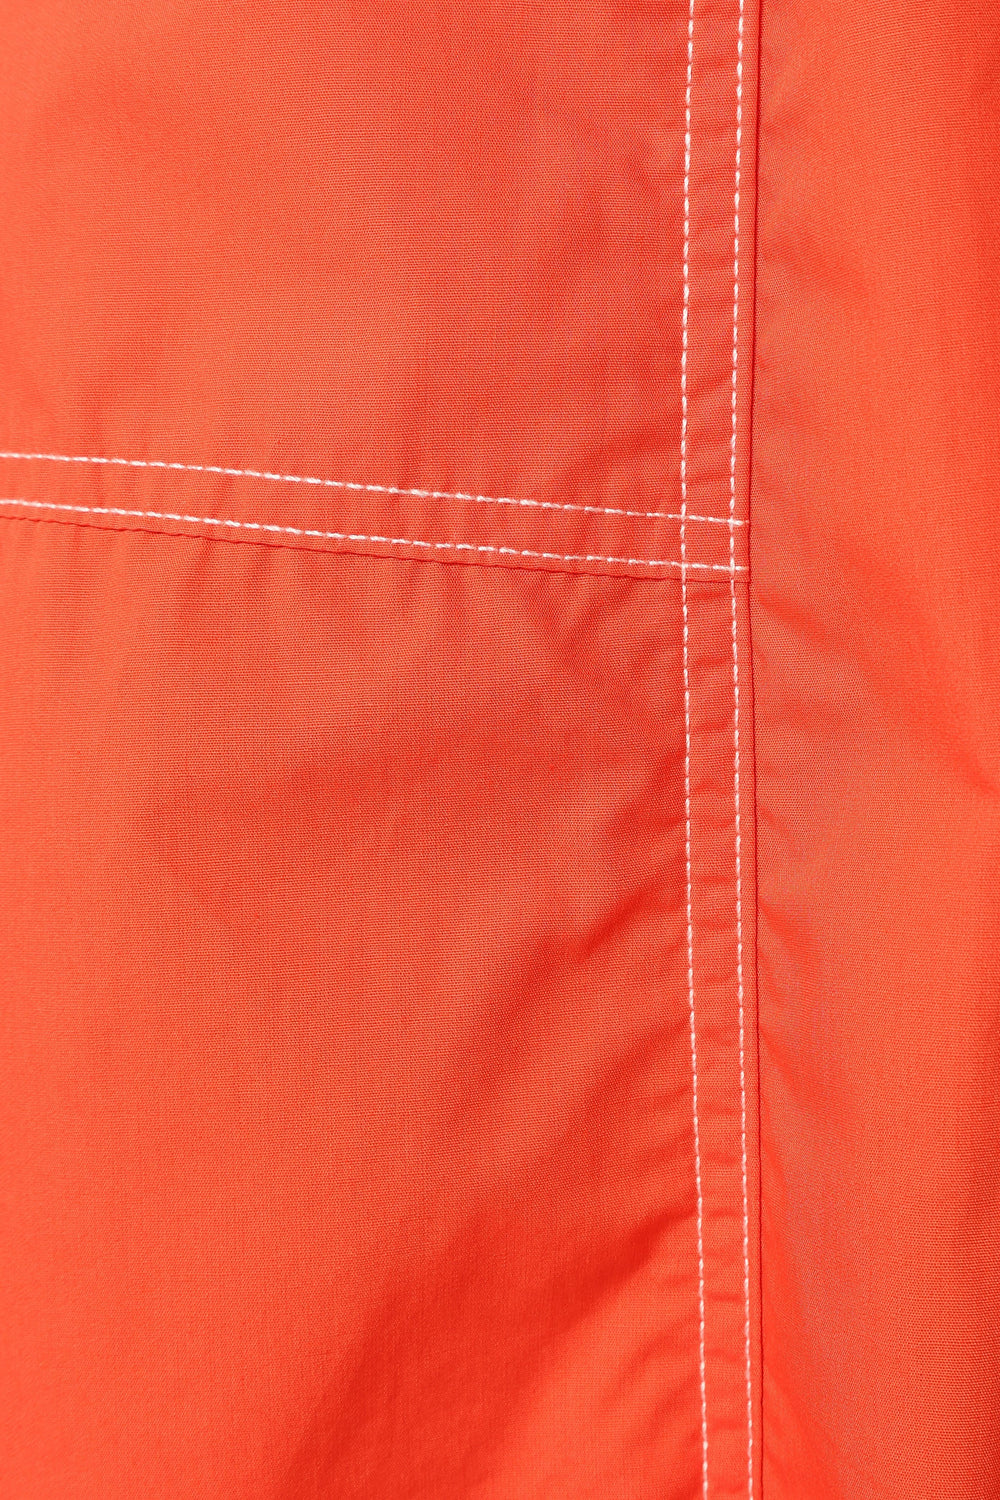 DRESSES @Torrence Contrast Stitch Midi Dress - Tangerine